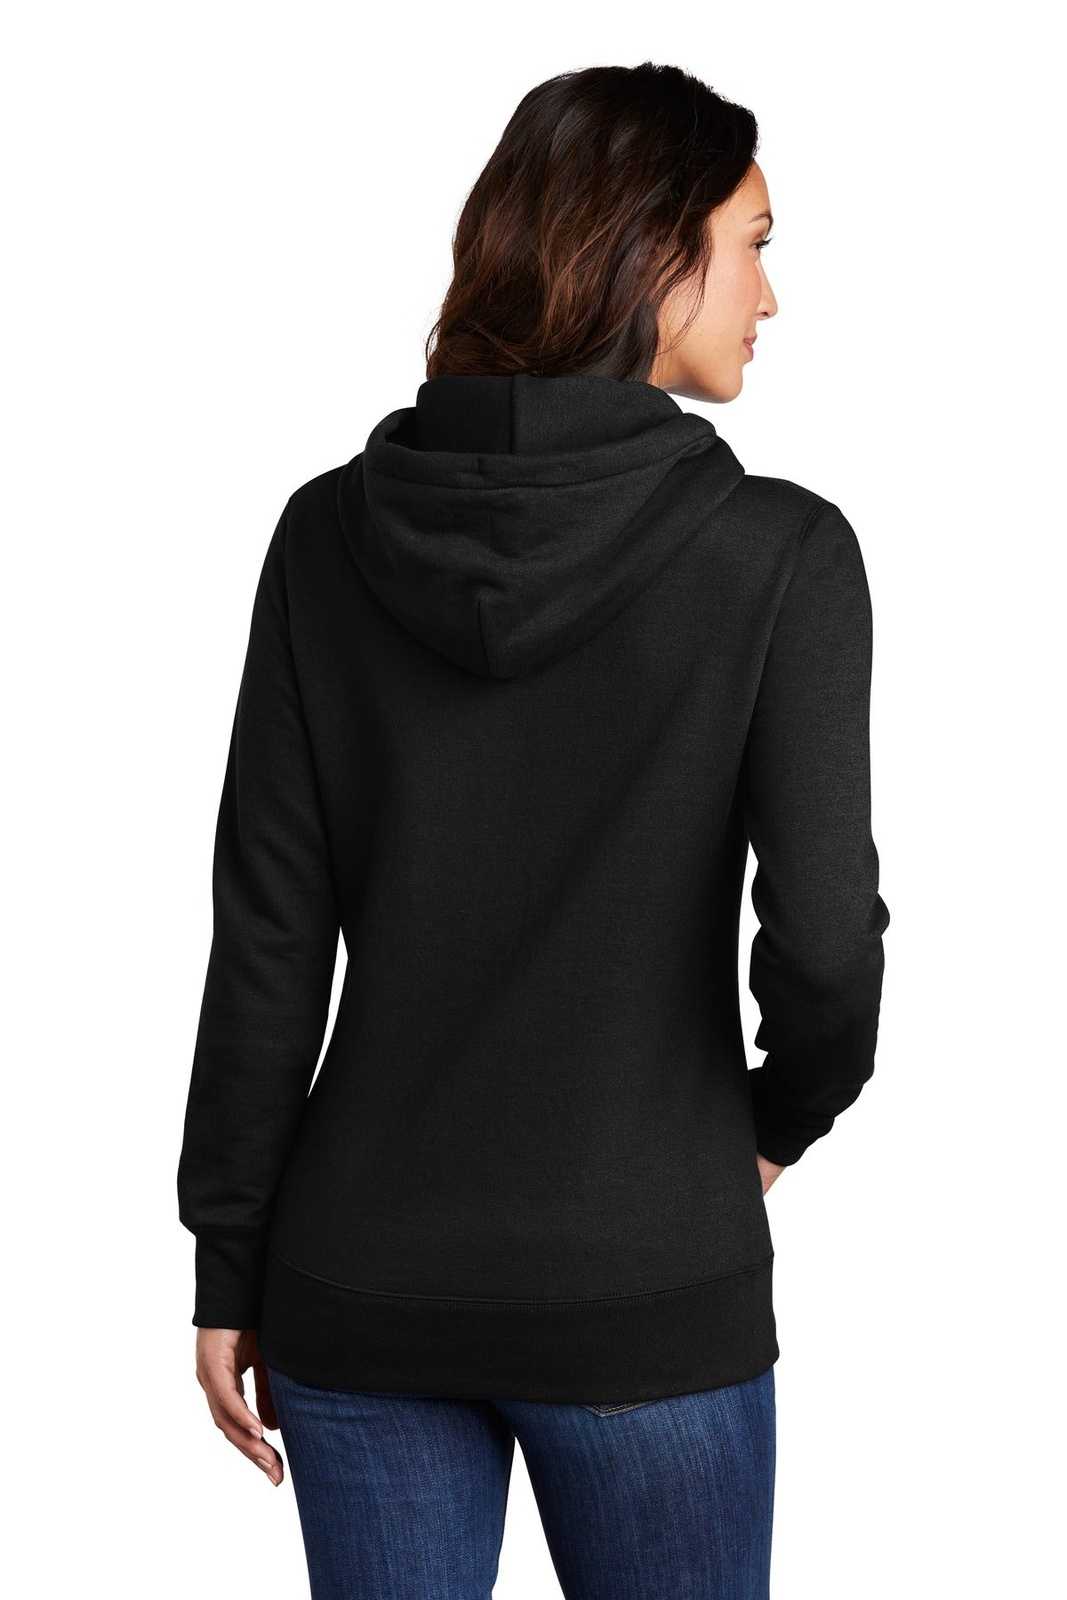 Port & Company LPC78H Ladies Core Fleece Pullover Hooded Sweatshirt - Jet Black - HIT a Double - 1